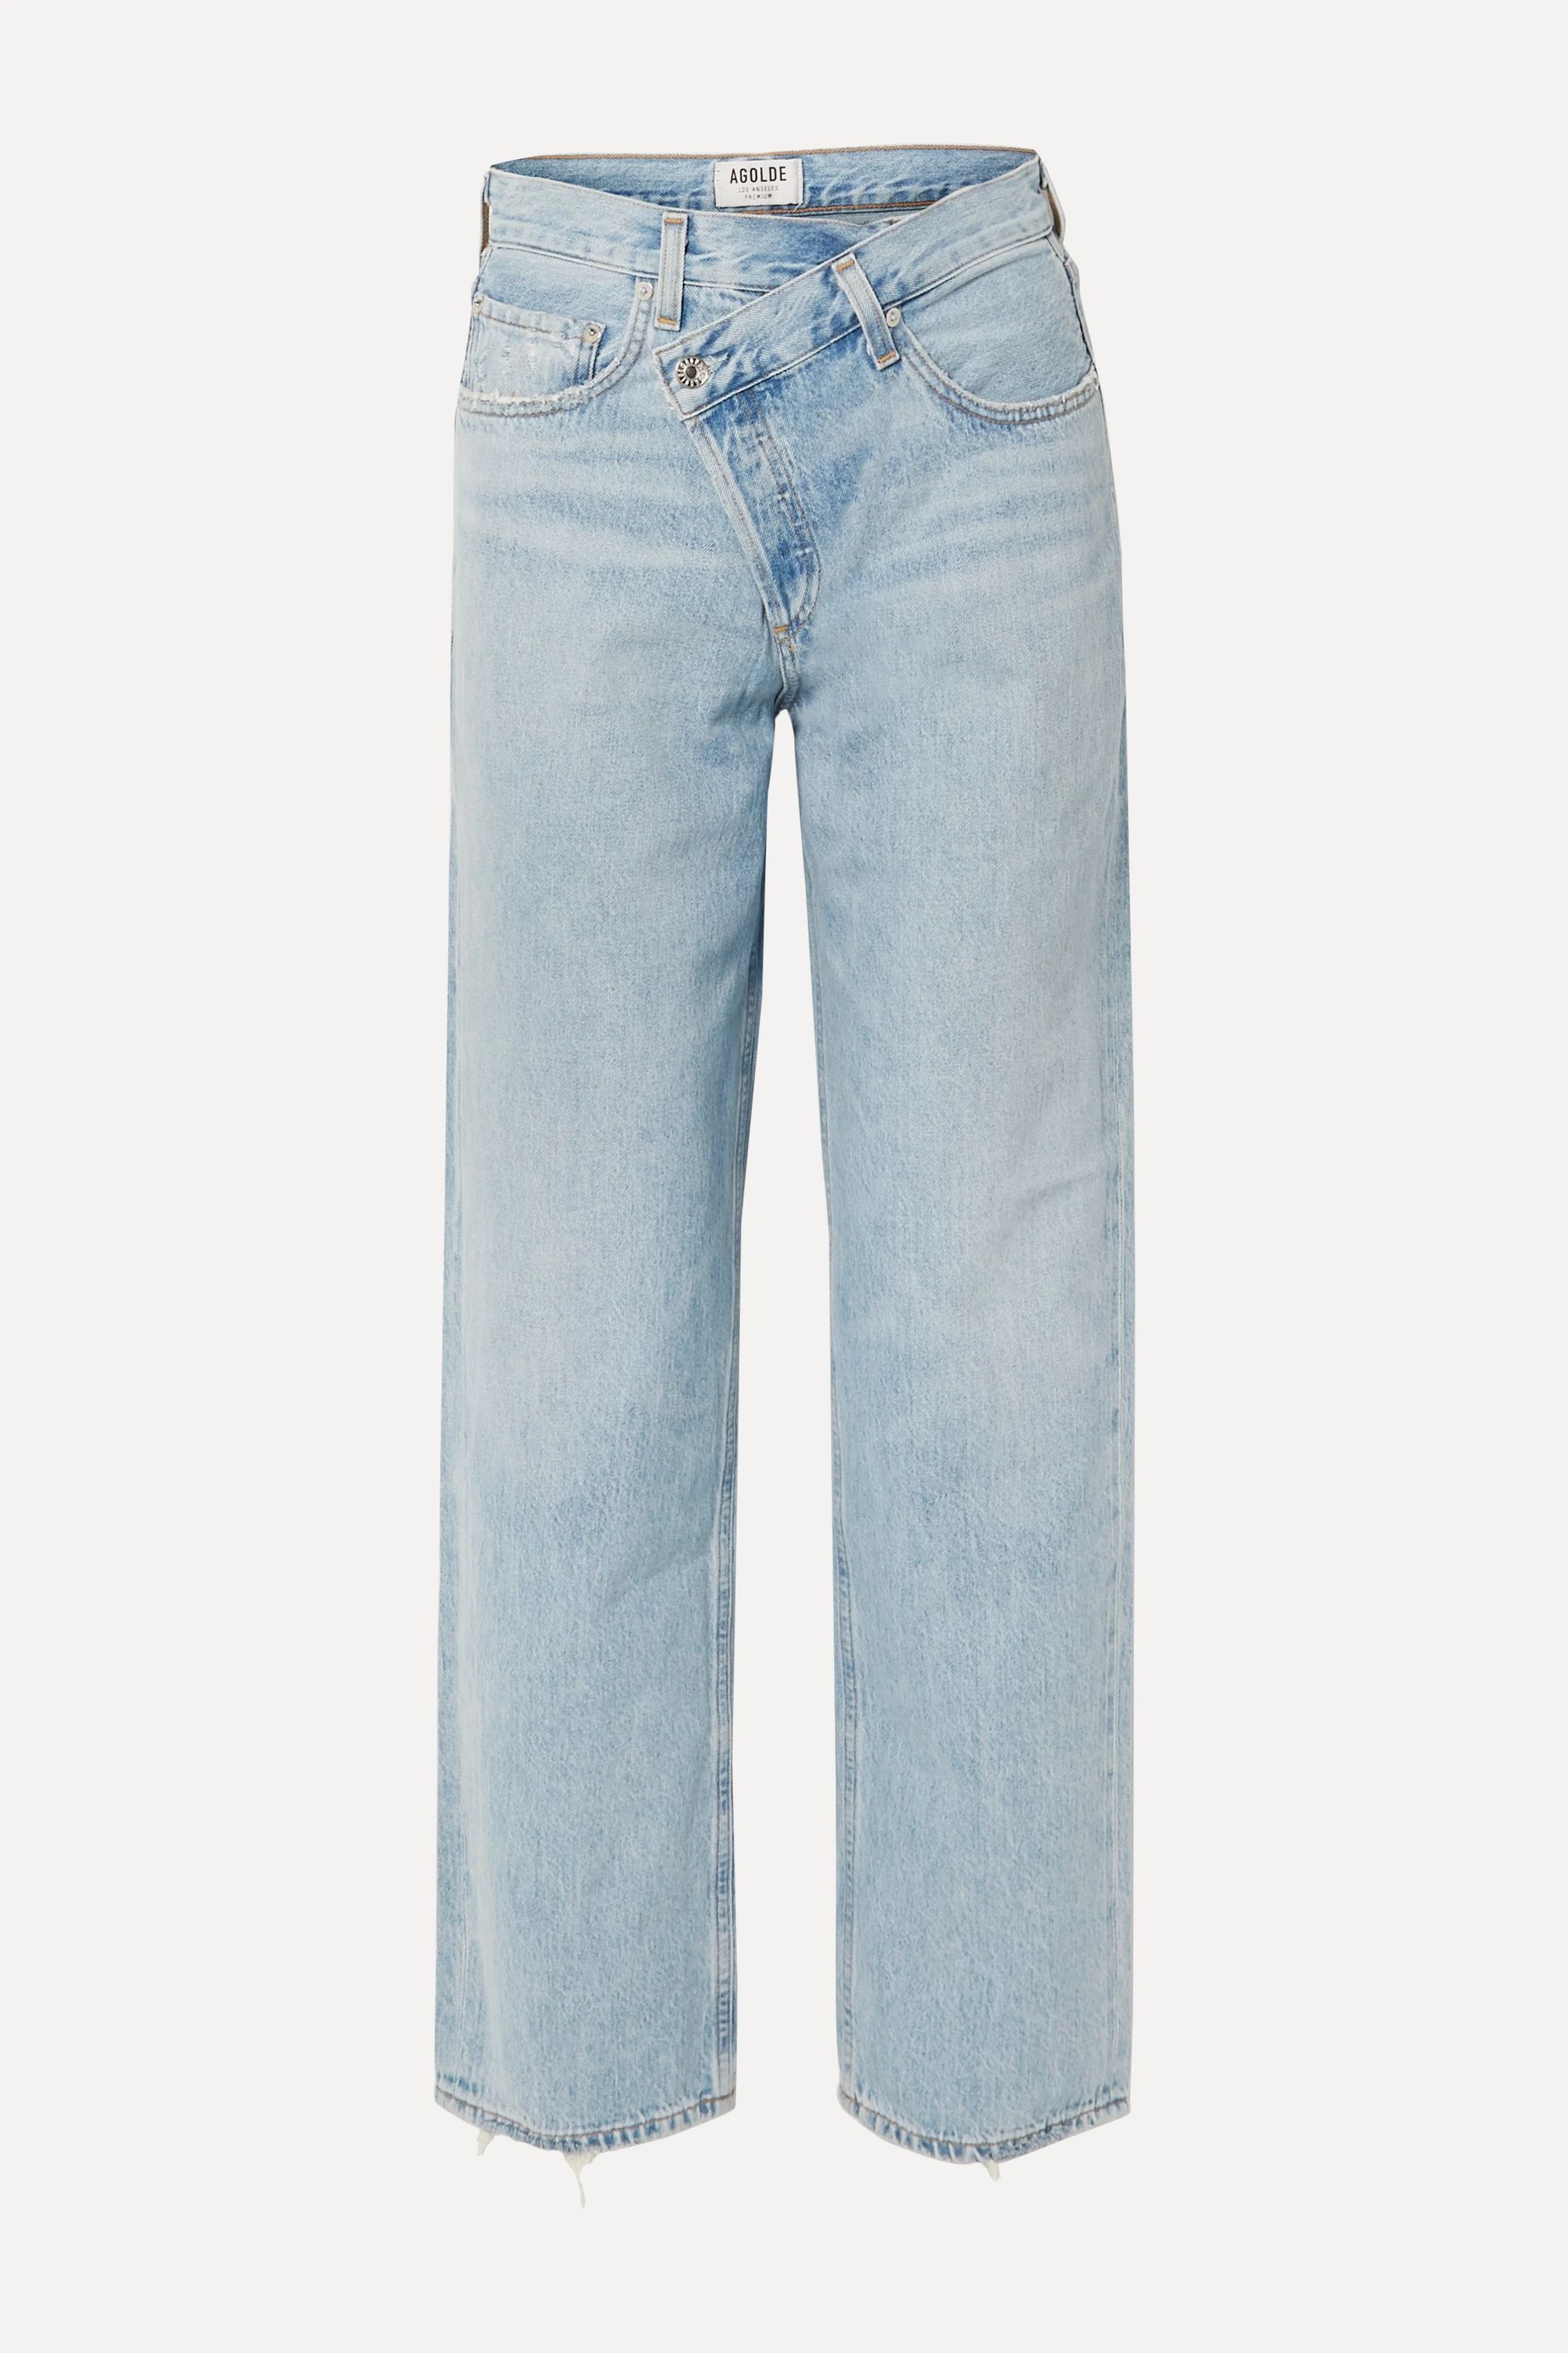 Heller Denim Criss Cross Upsized hoch sitzende Jeans mit weitem Bein in Distressed-Optik | AGOLDE... | NET-A-PORTER (UK & EU)